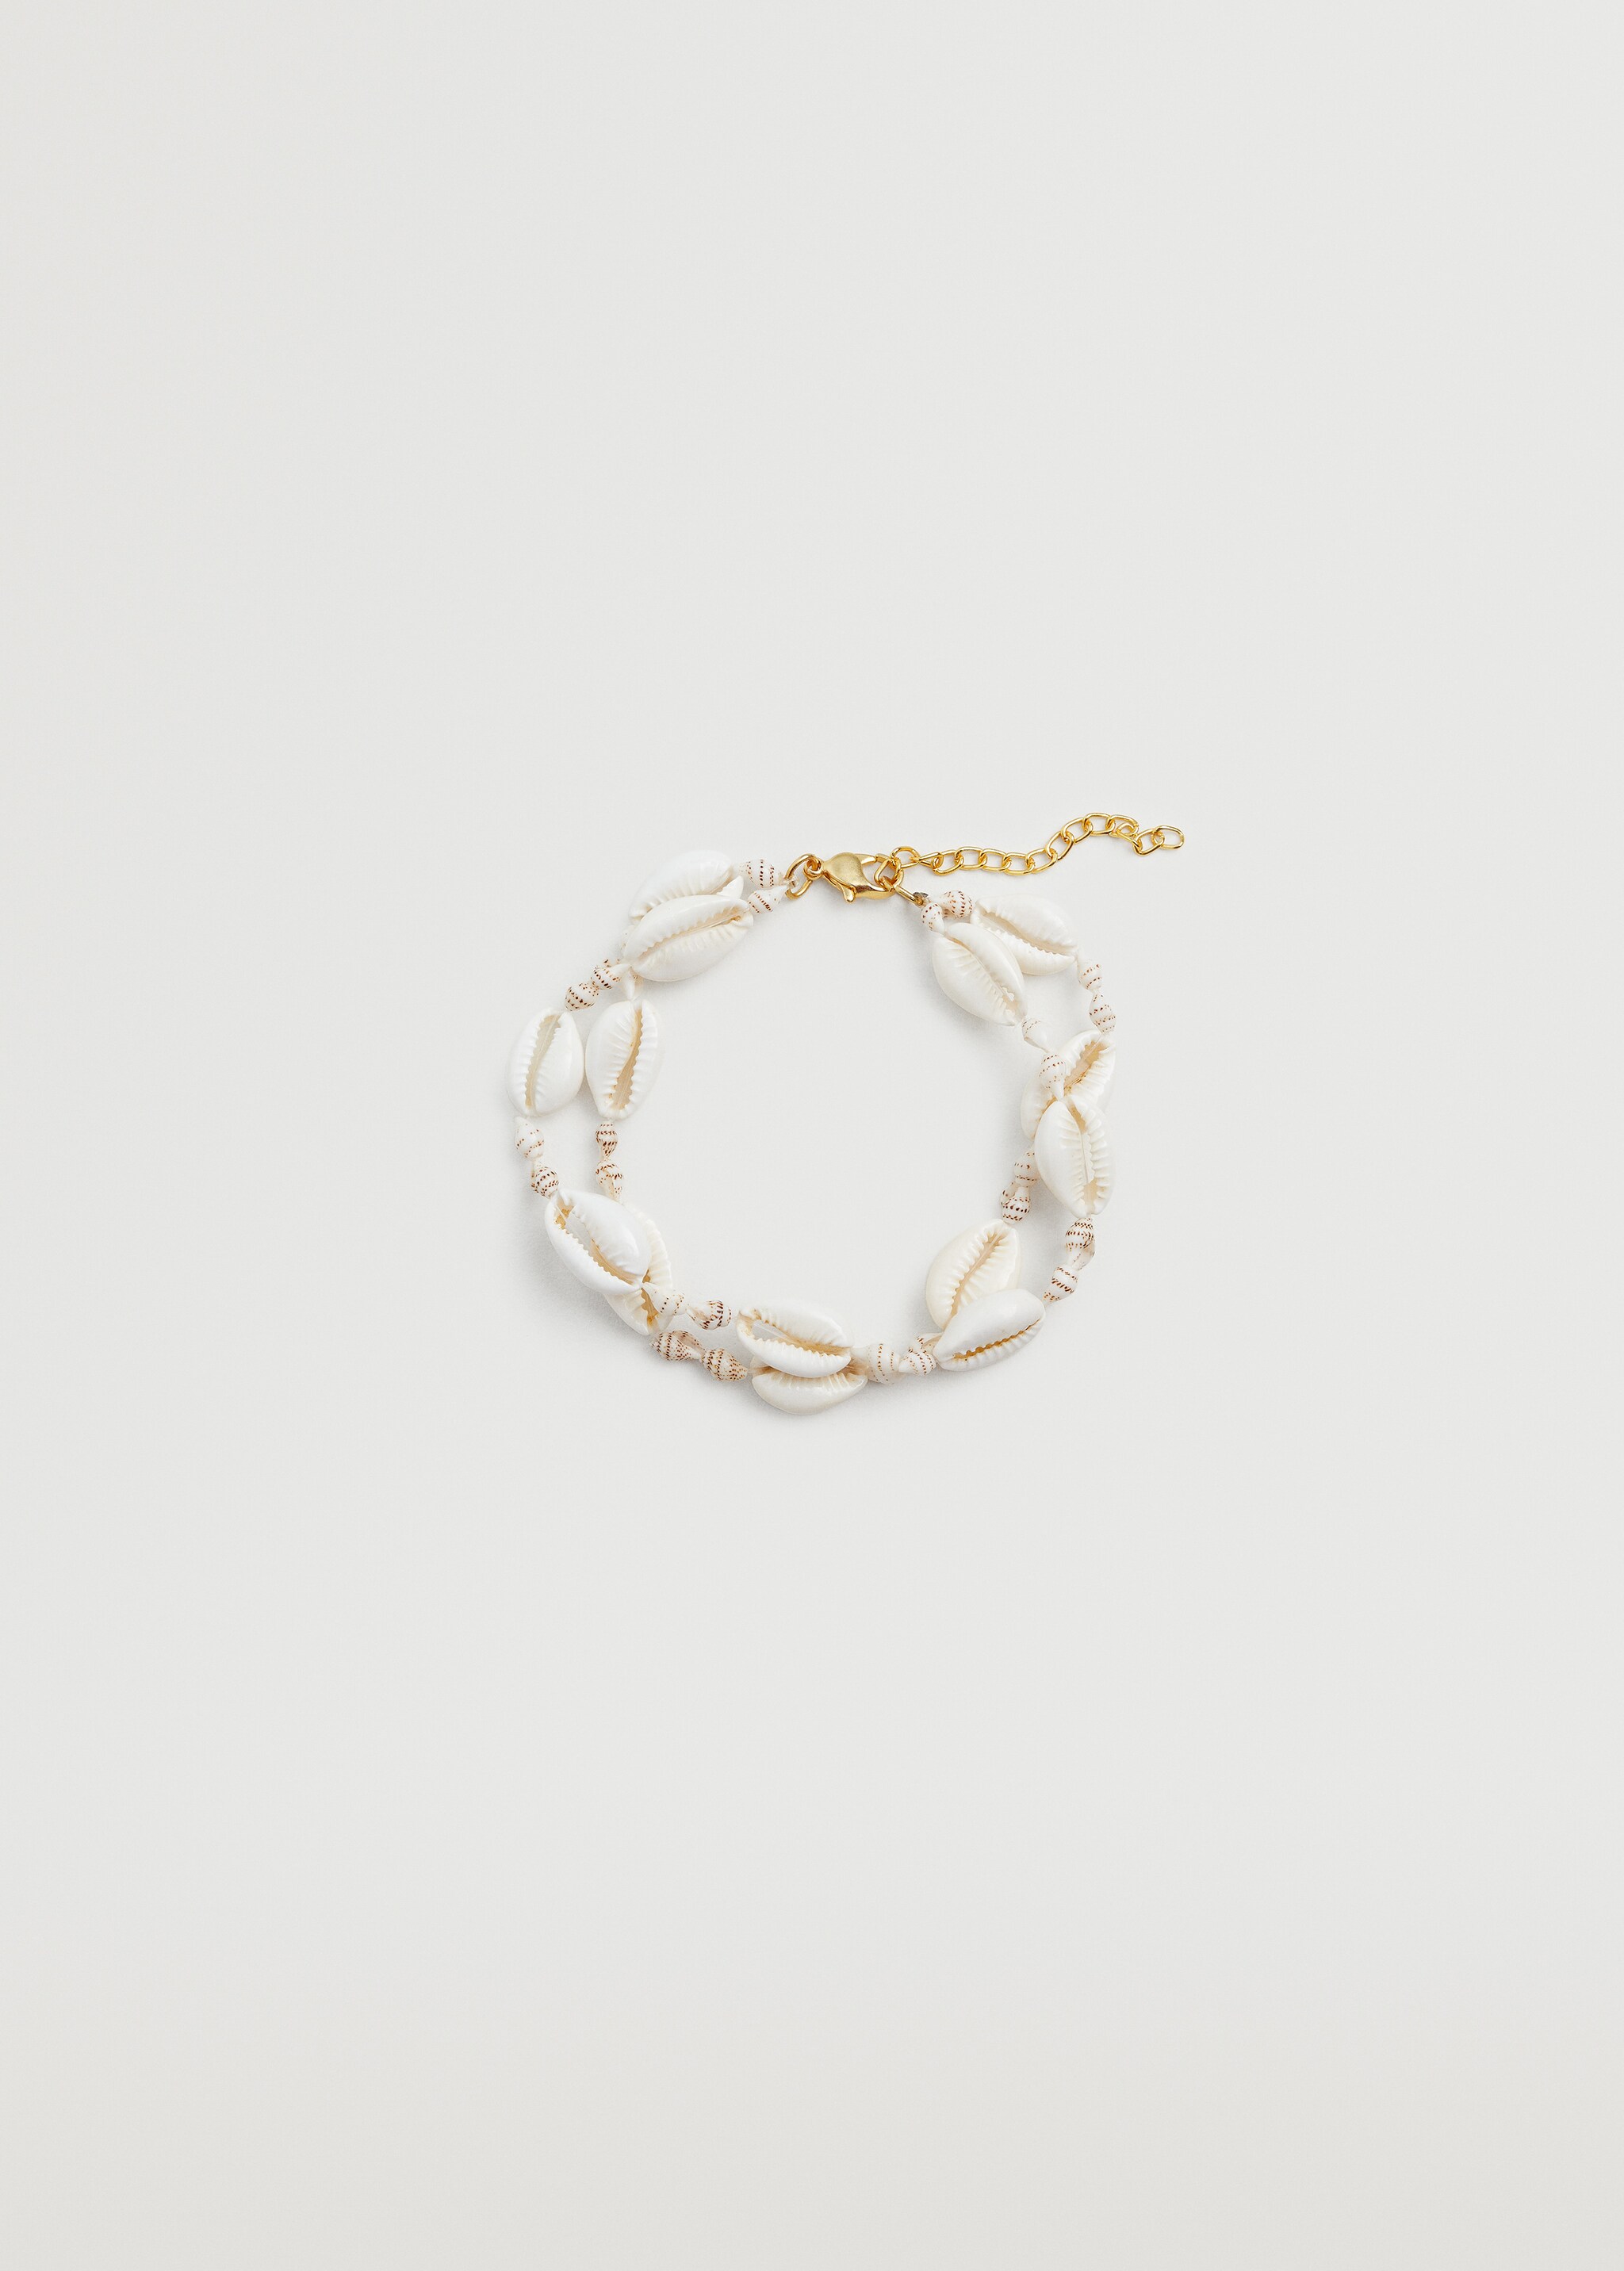 Seashell anklet bracelet - Article without model